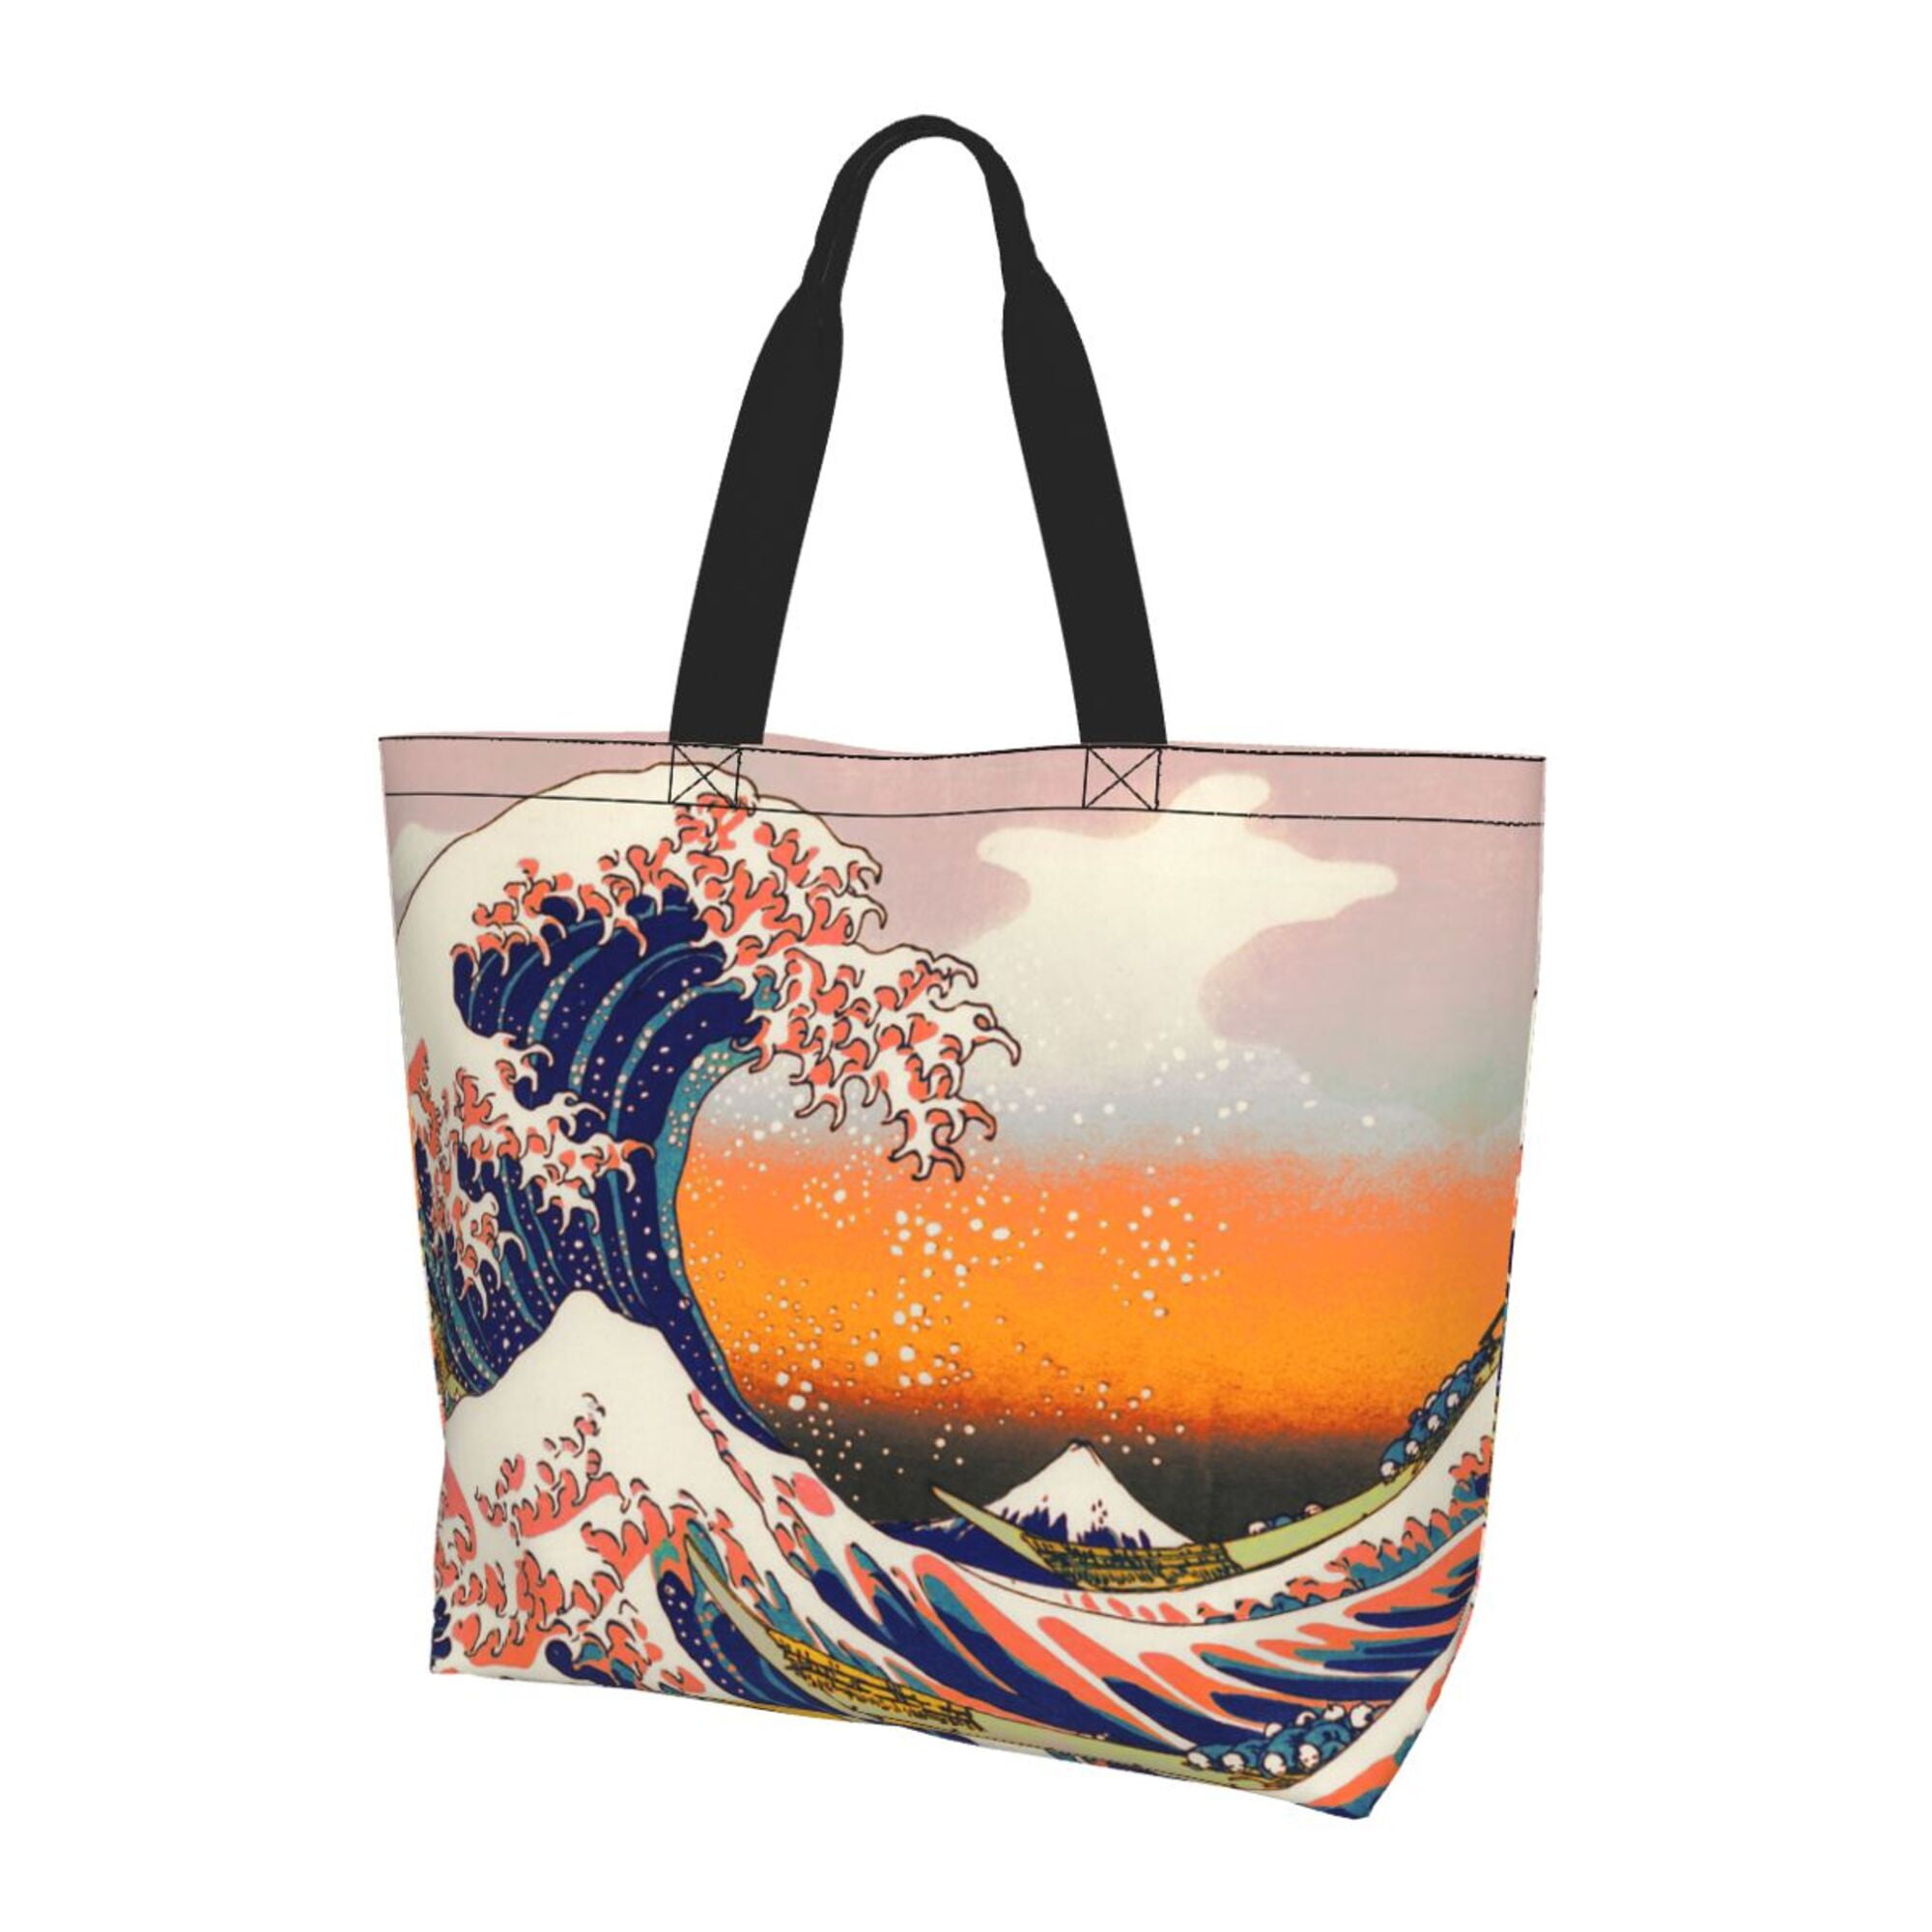 Wave beach bag